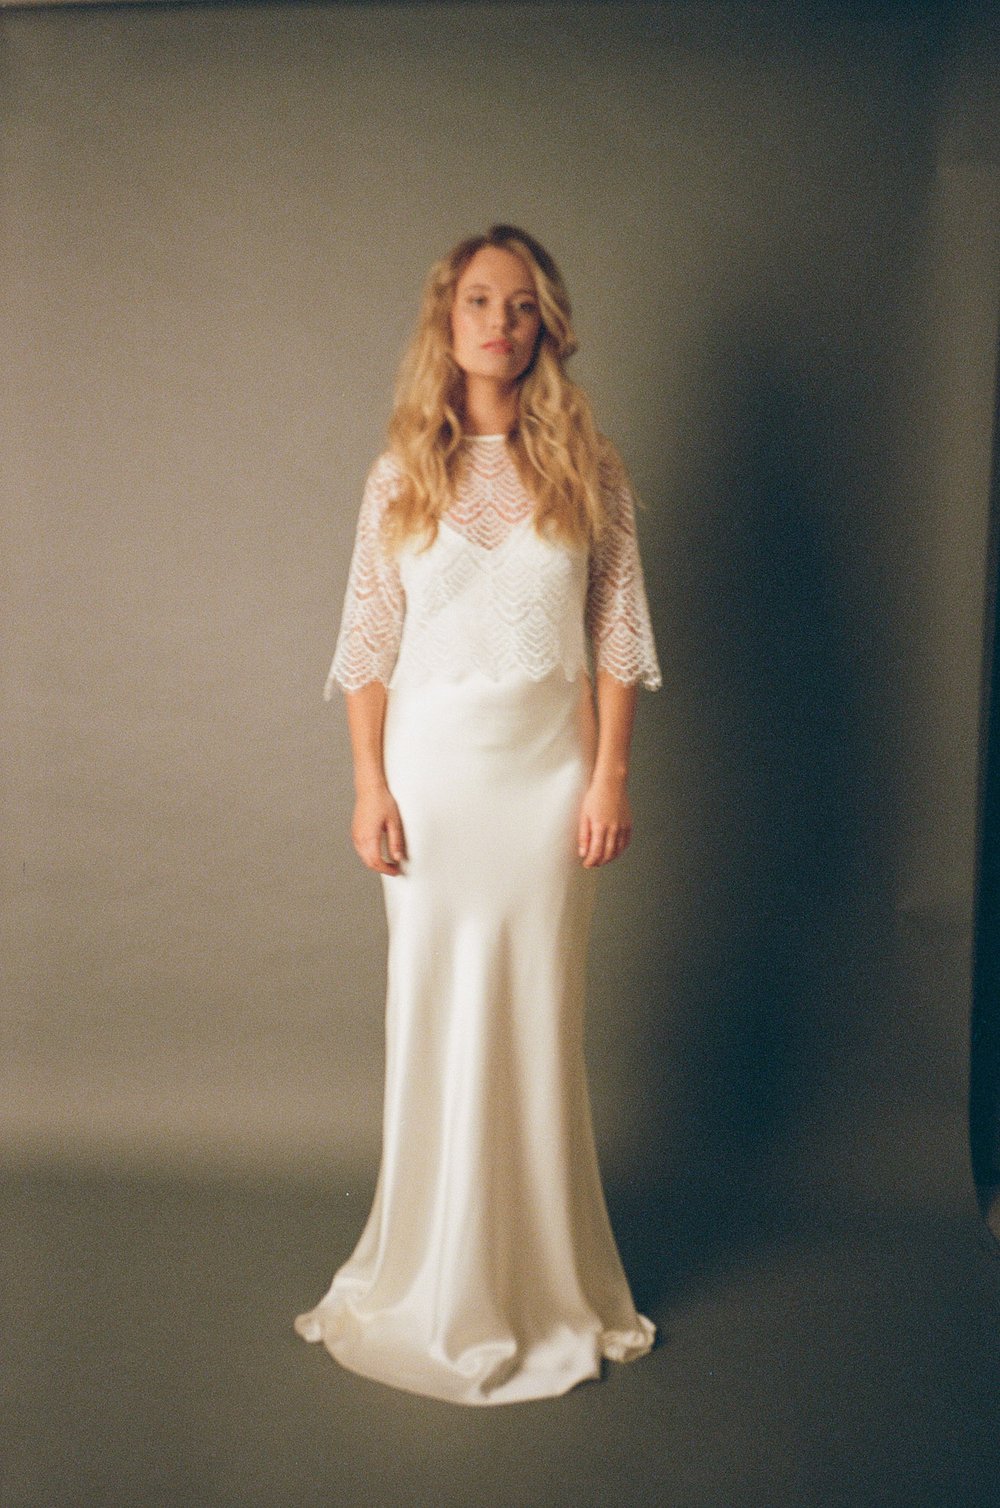 Analogue-shoot-Hollie-Cornish-photographer-Kate-Beaumont-wedding-gowns-Sheffield-27.jpg